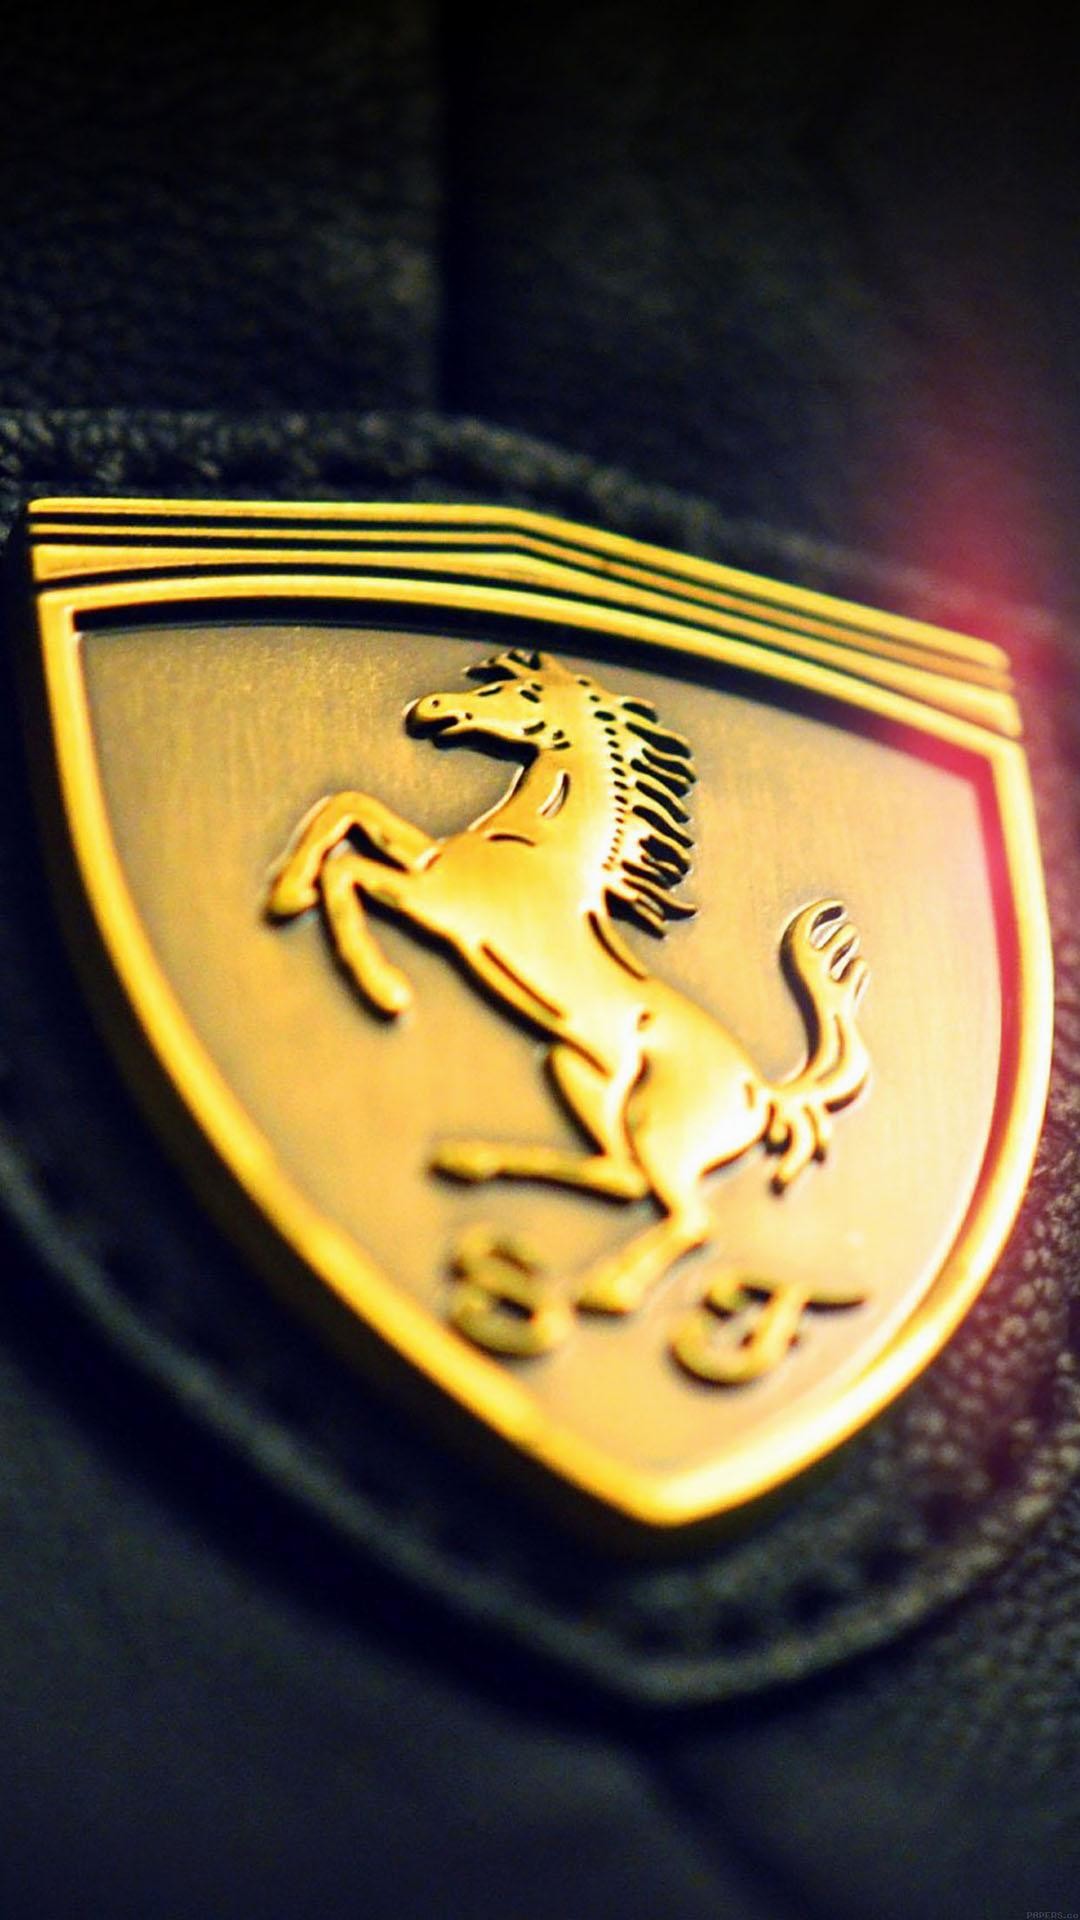 Wallpaper.wiki Ferrari iPhone logo photos PIC WPB005133